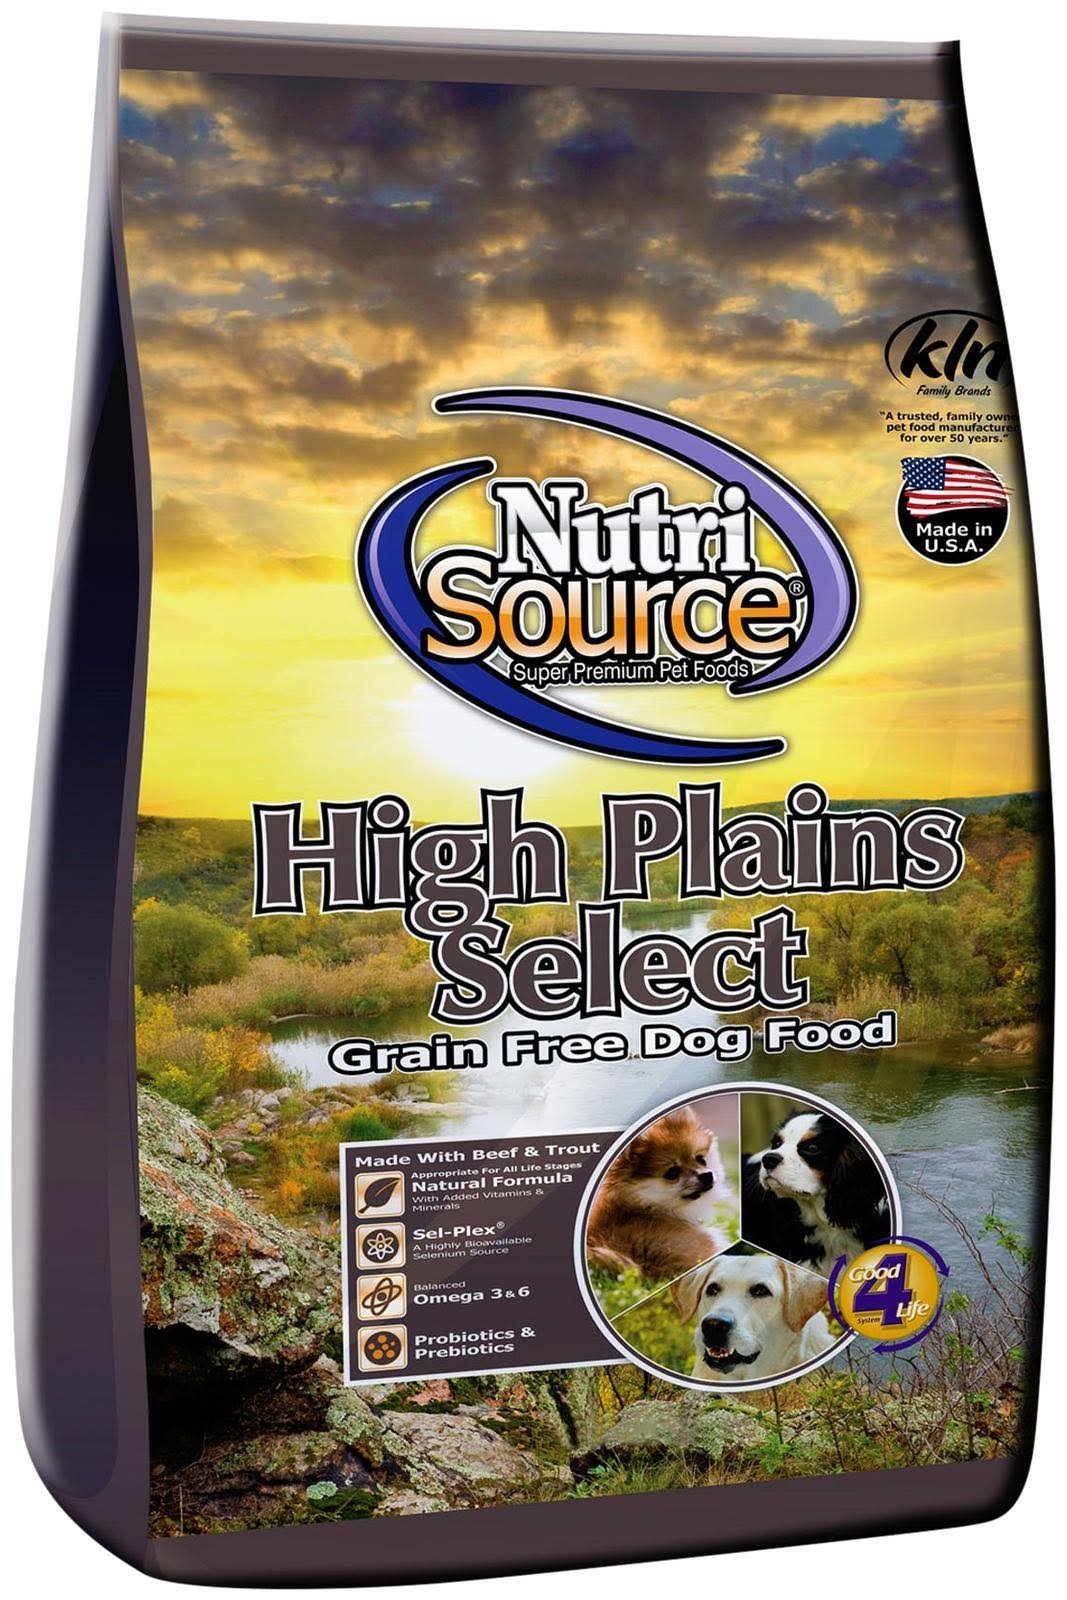 Nutri Source High Plains Select Dog Food - 15lb